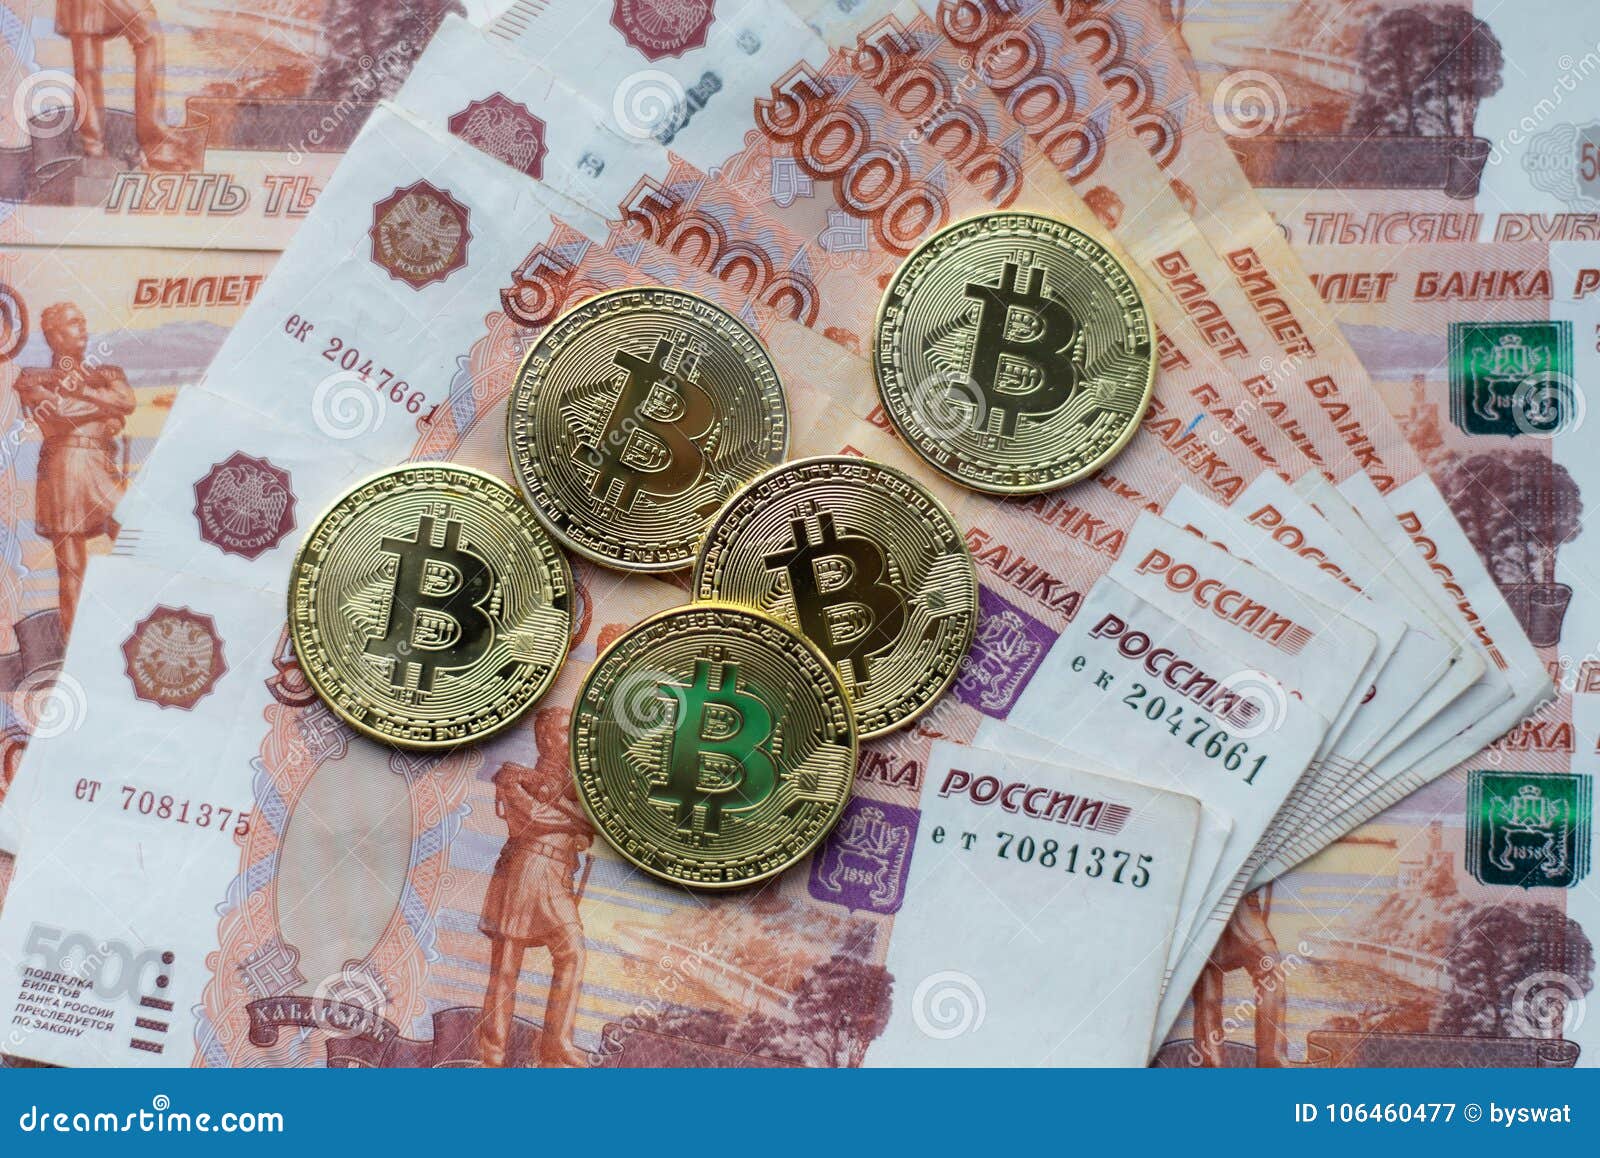 50 тысяч рублей в биткоинах псб банк курс валют на сегодня